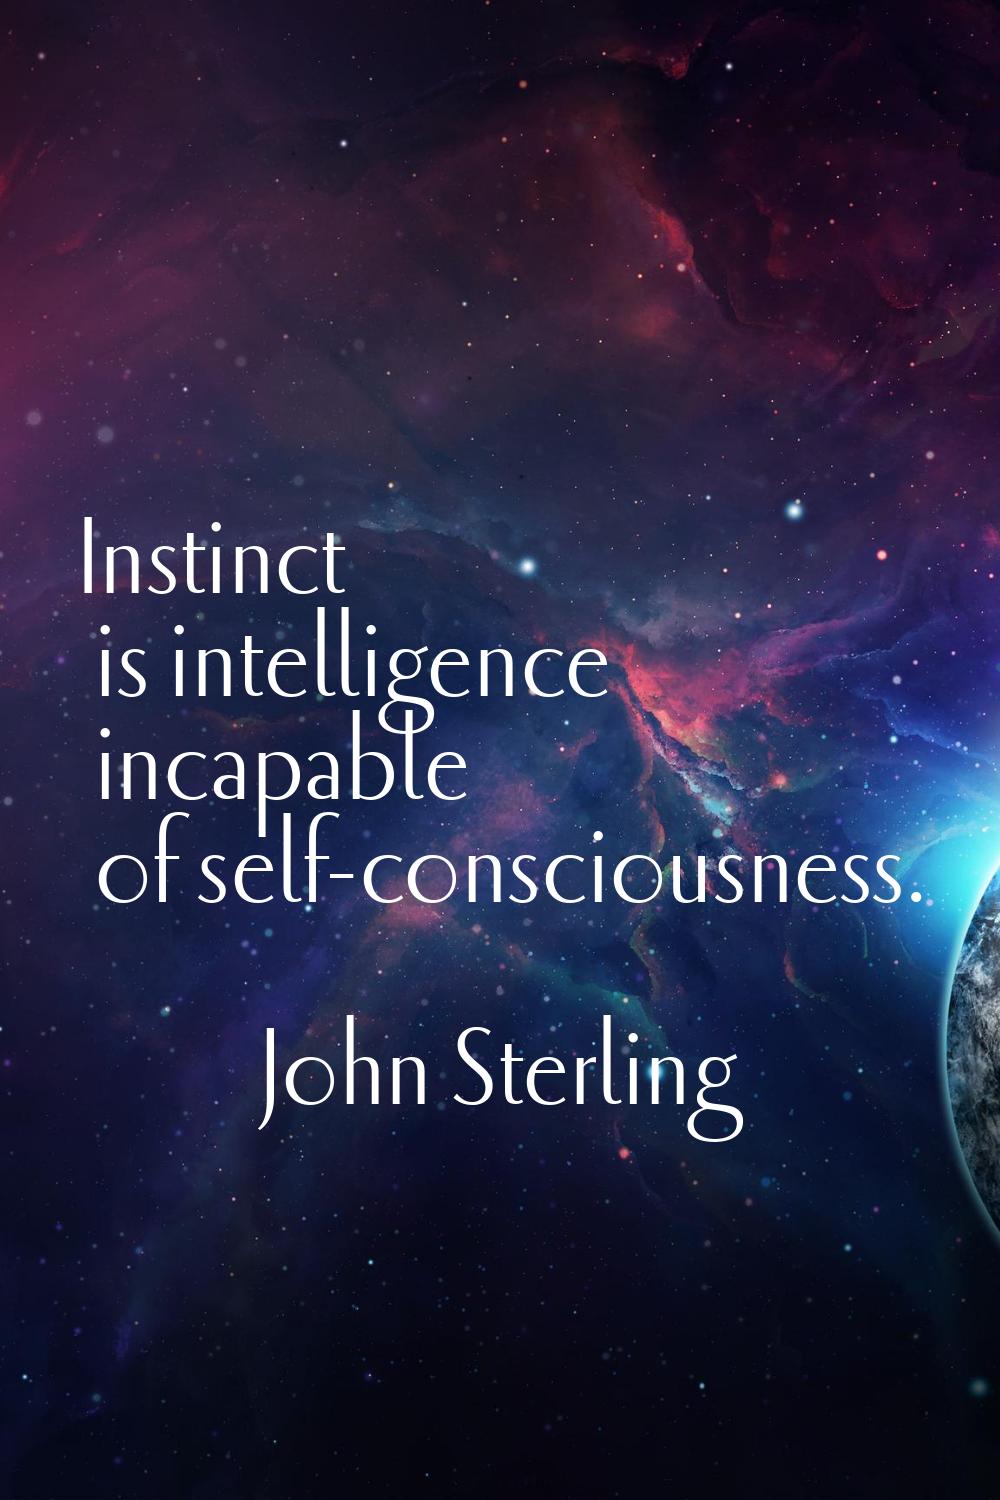 Instinct is intelligence incapable of self-consciousness.